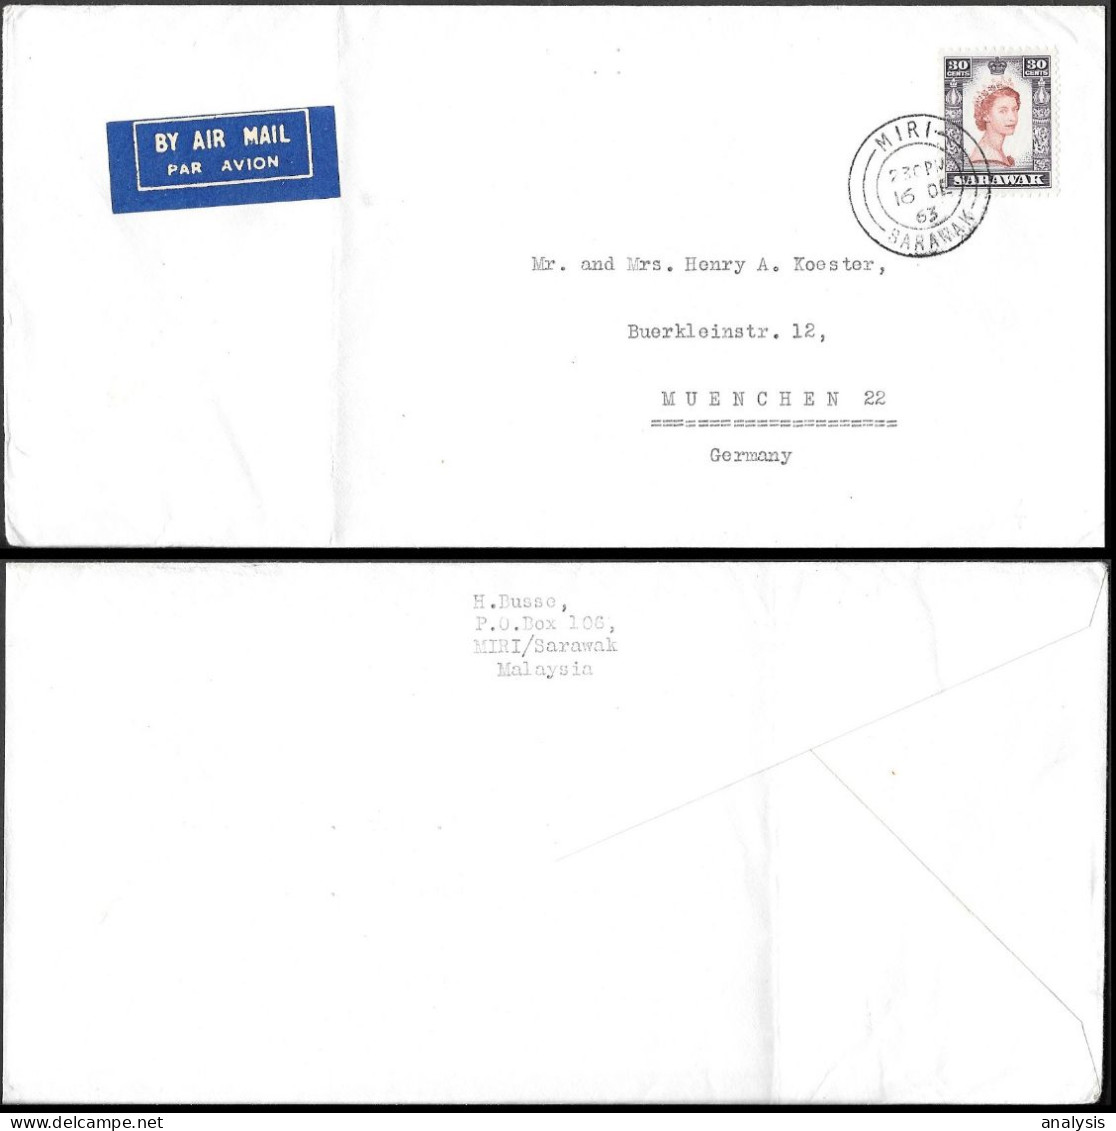 Sarawak Miri Cover Mailed To Germany 1963. QEII 30c Rate - Sarawak (...-1963)